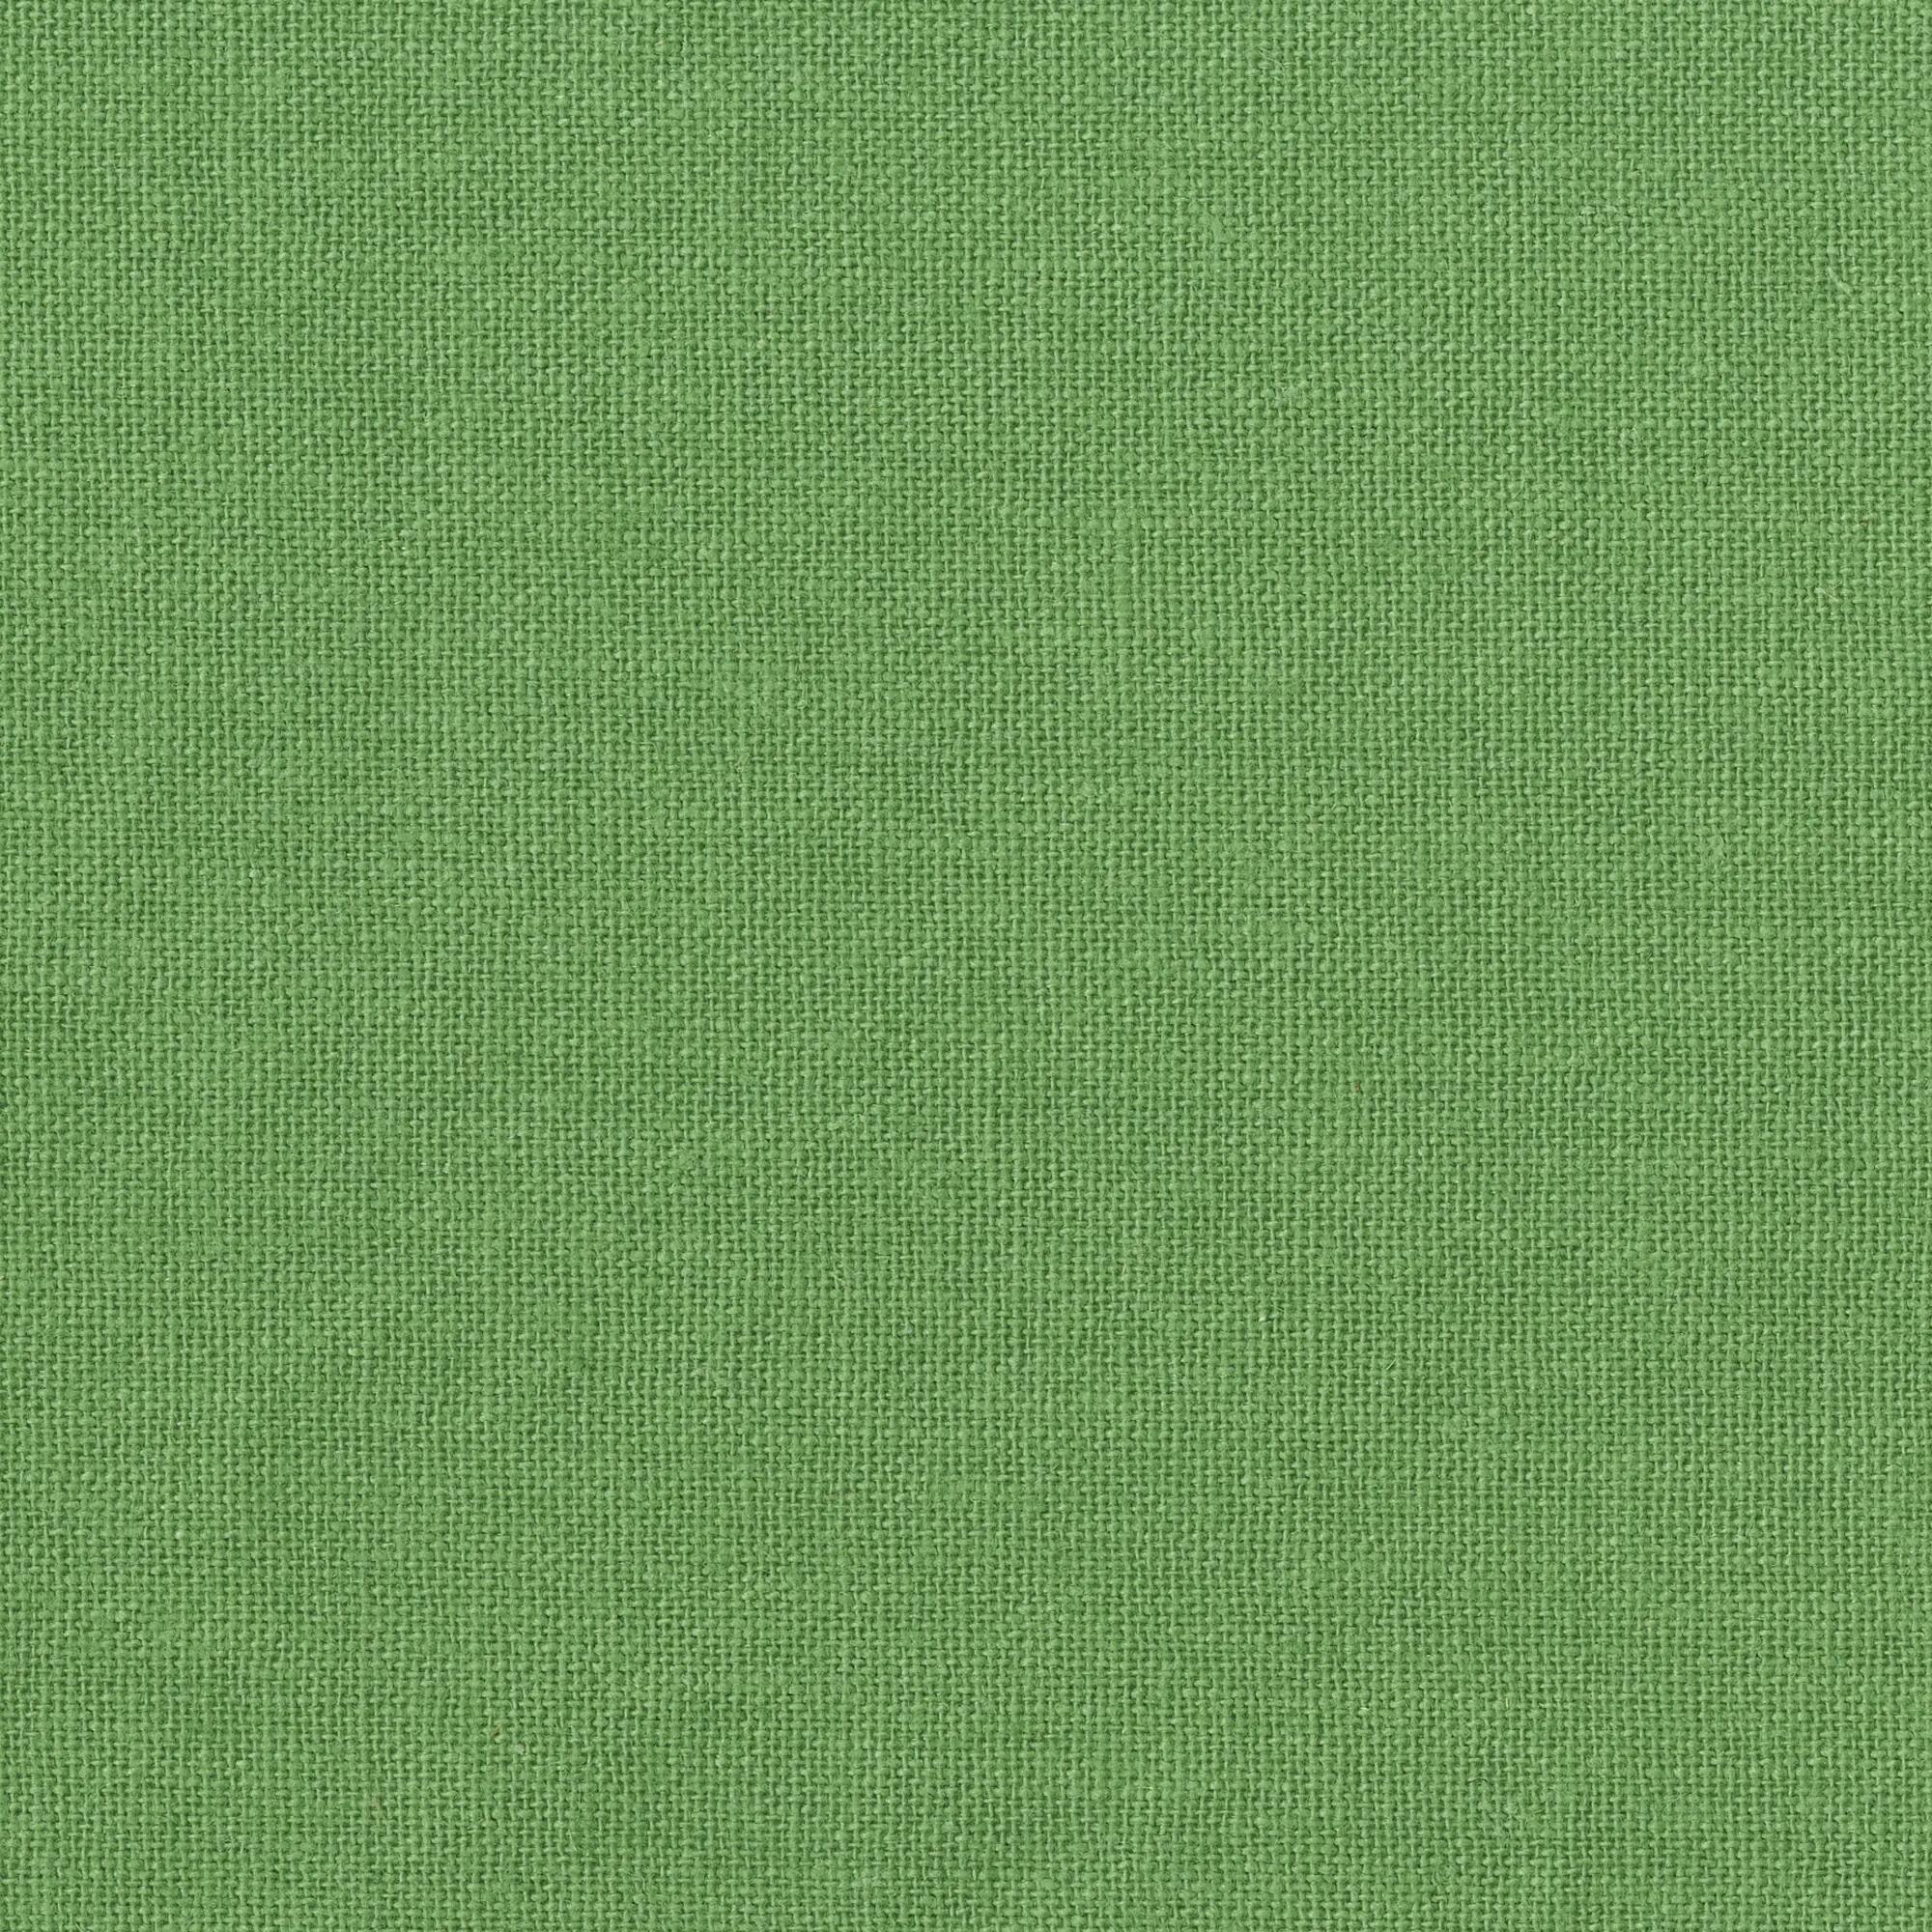 Tela al corte lino 3 verde ancho 280 cm